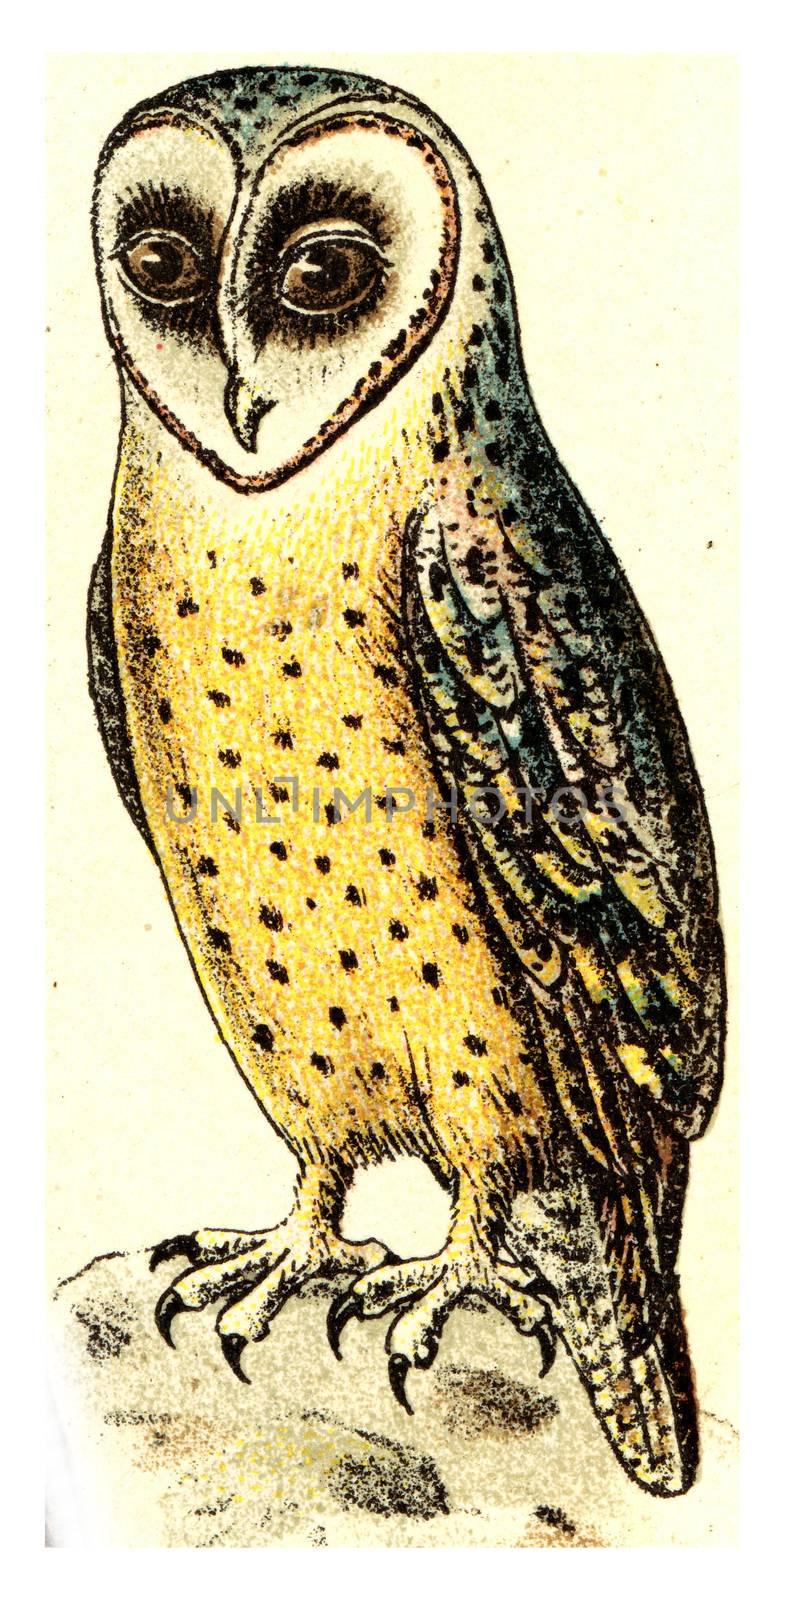 Barn owl, vintage engraved illustration. From Deutch Birds of Europe Atlas.
